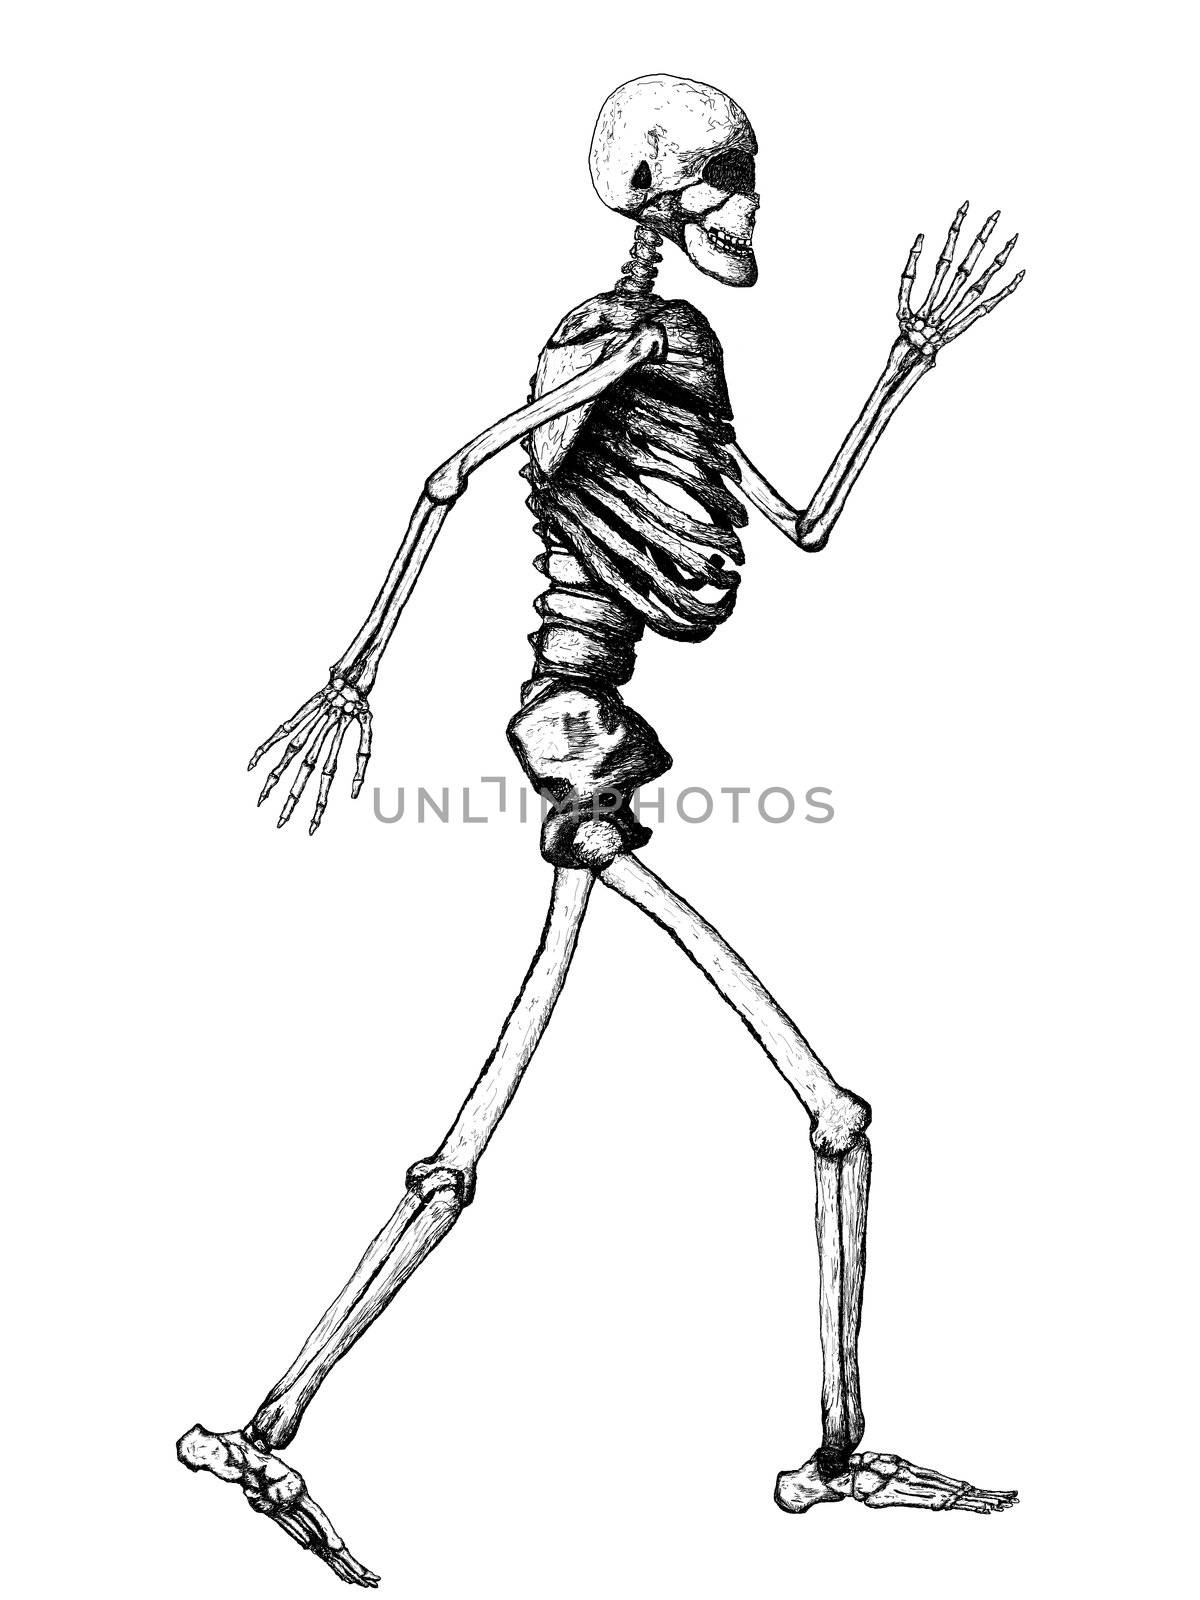 Full Human Skeleton Illustration on White Background by bobbigmac